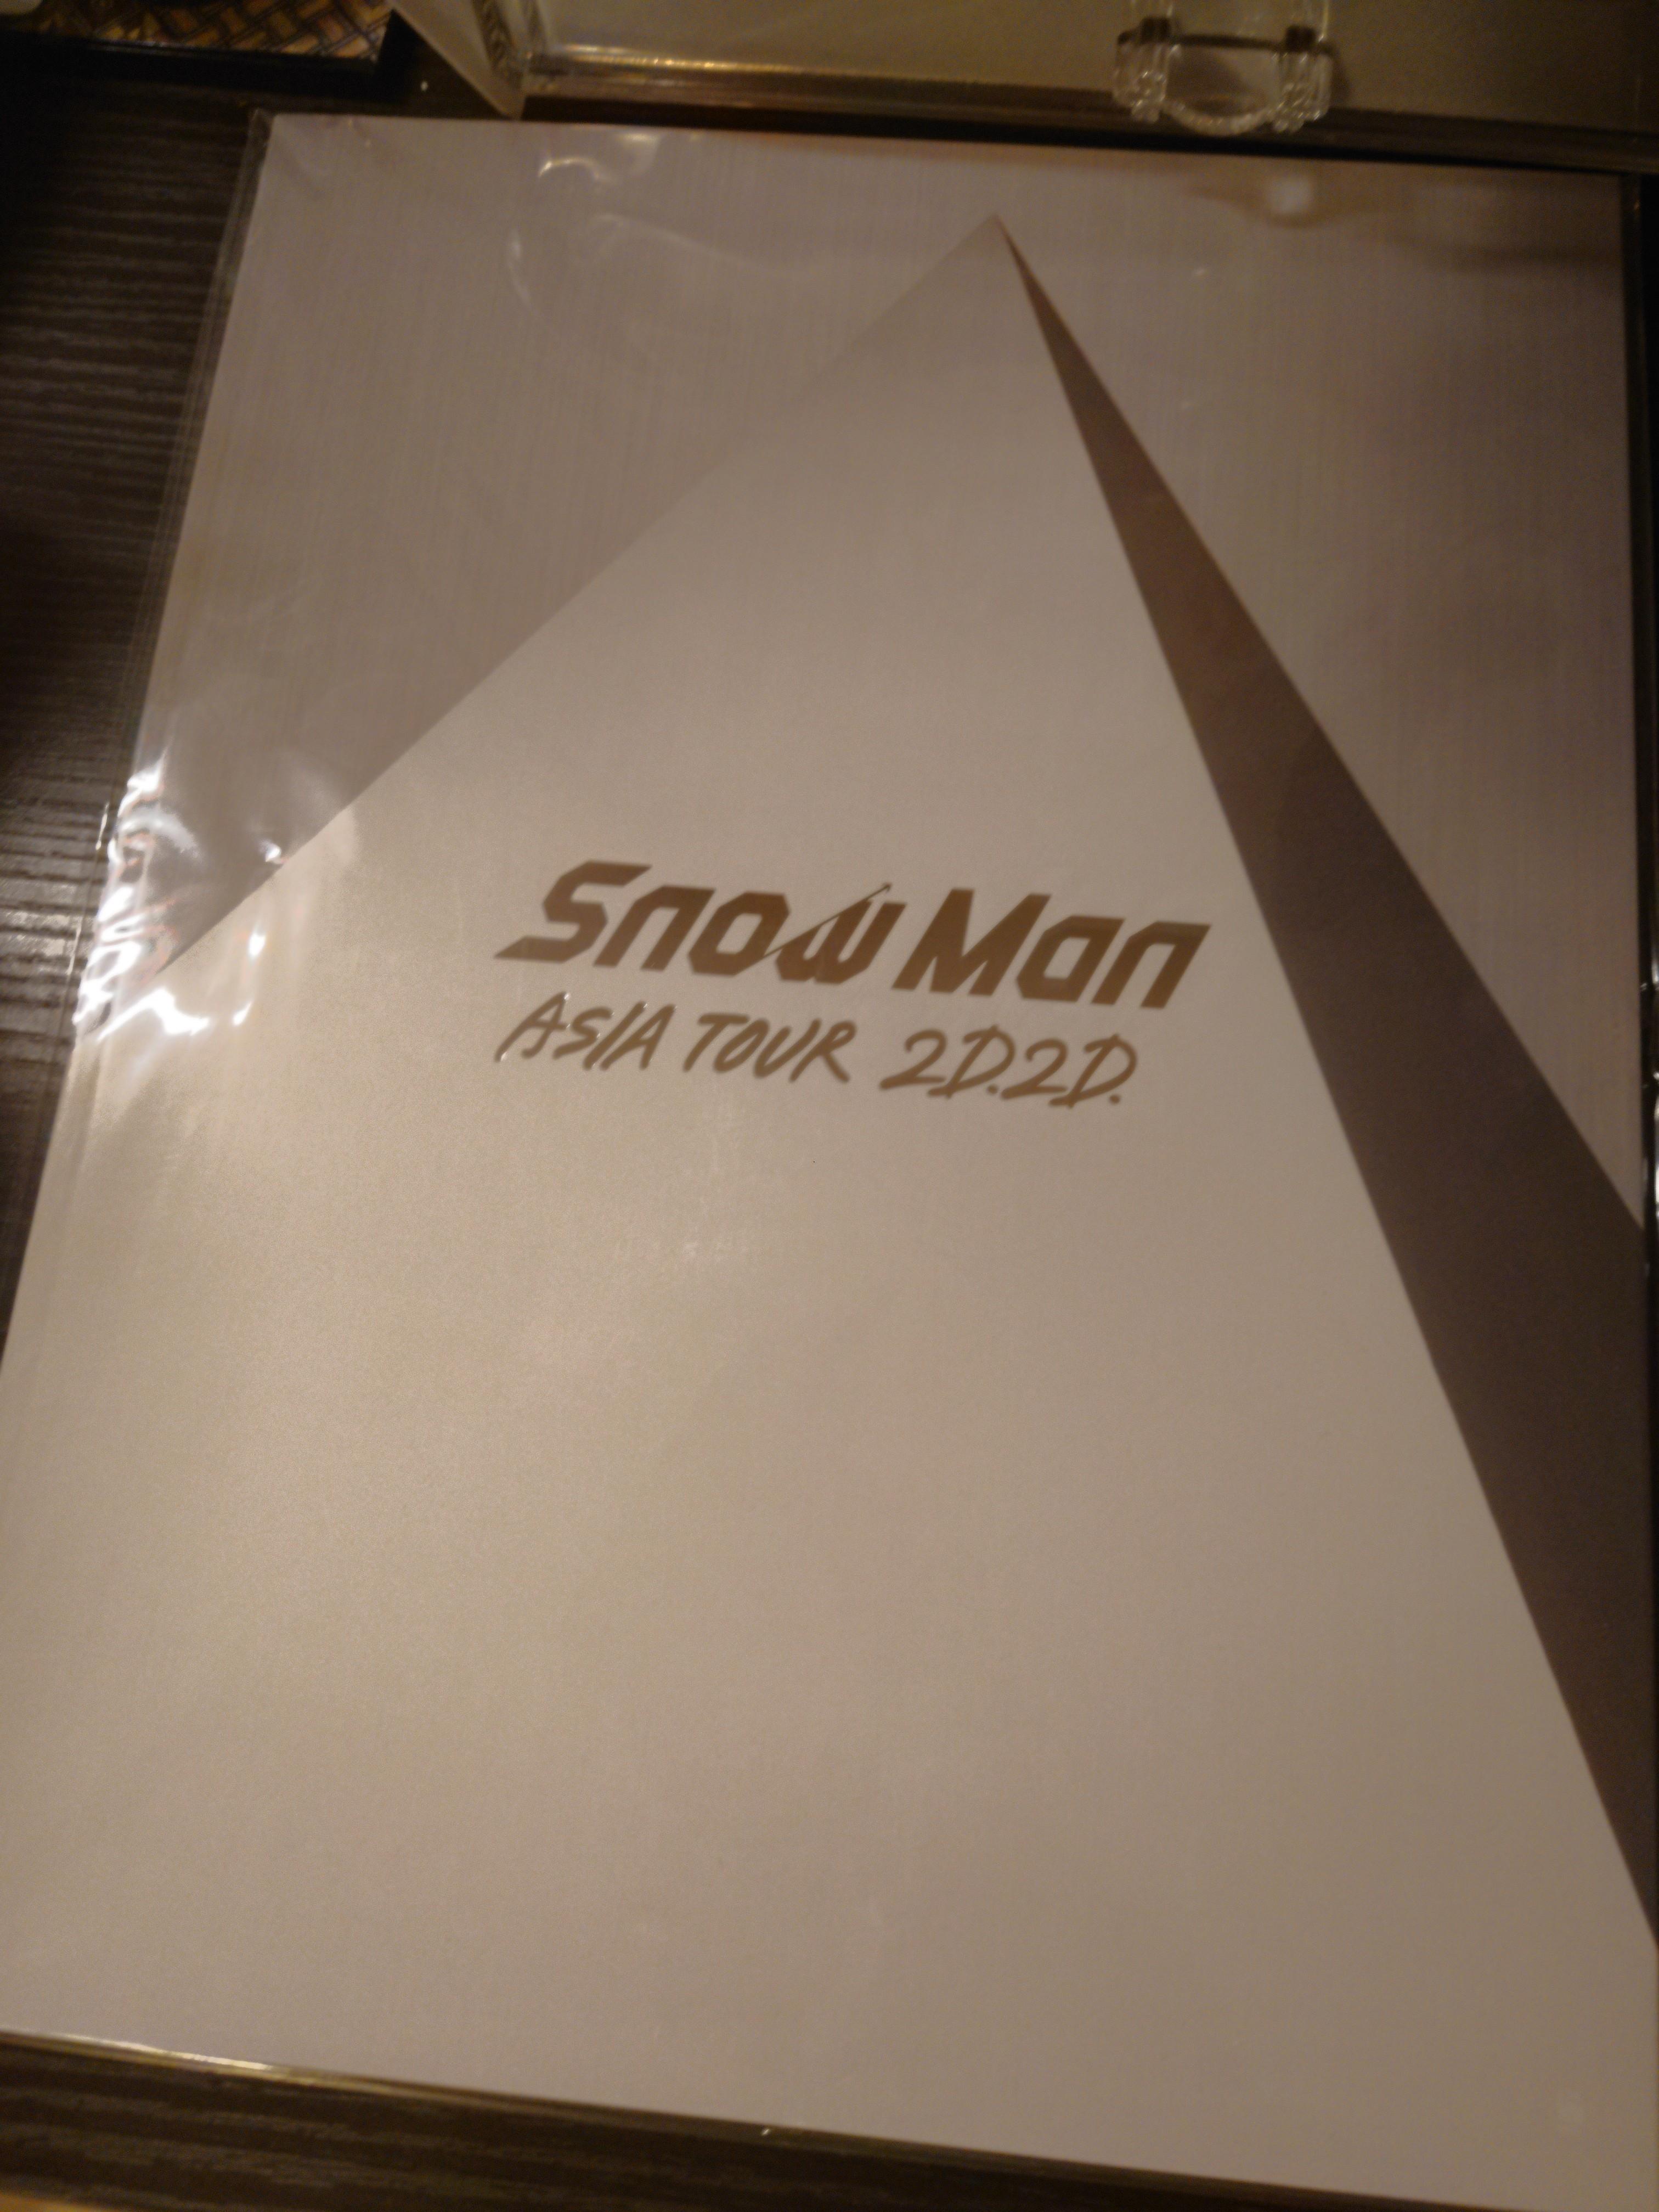 Snow Man 出道演唱會Asia Tour 2D.2D. 周邊場刊, 興趣及遊戲, 收藏品及